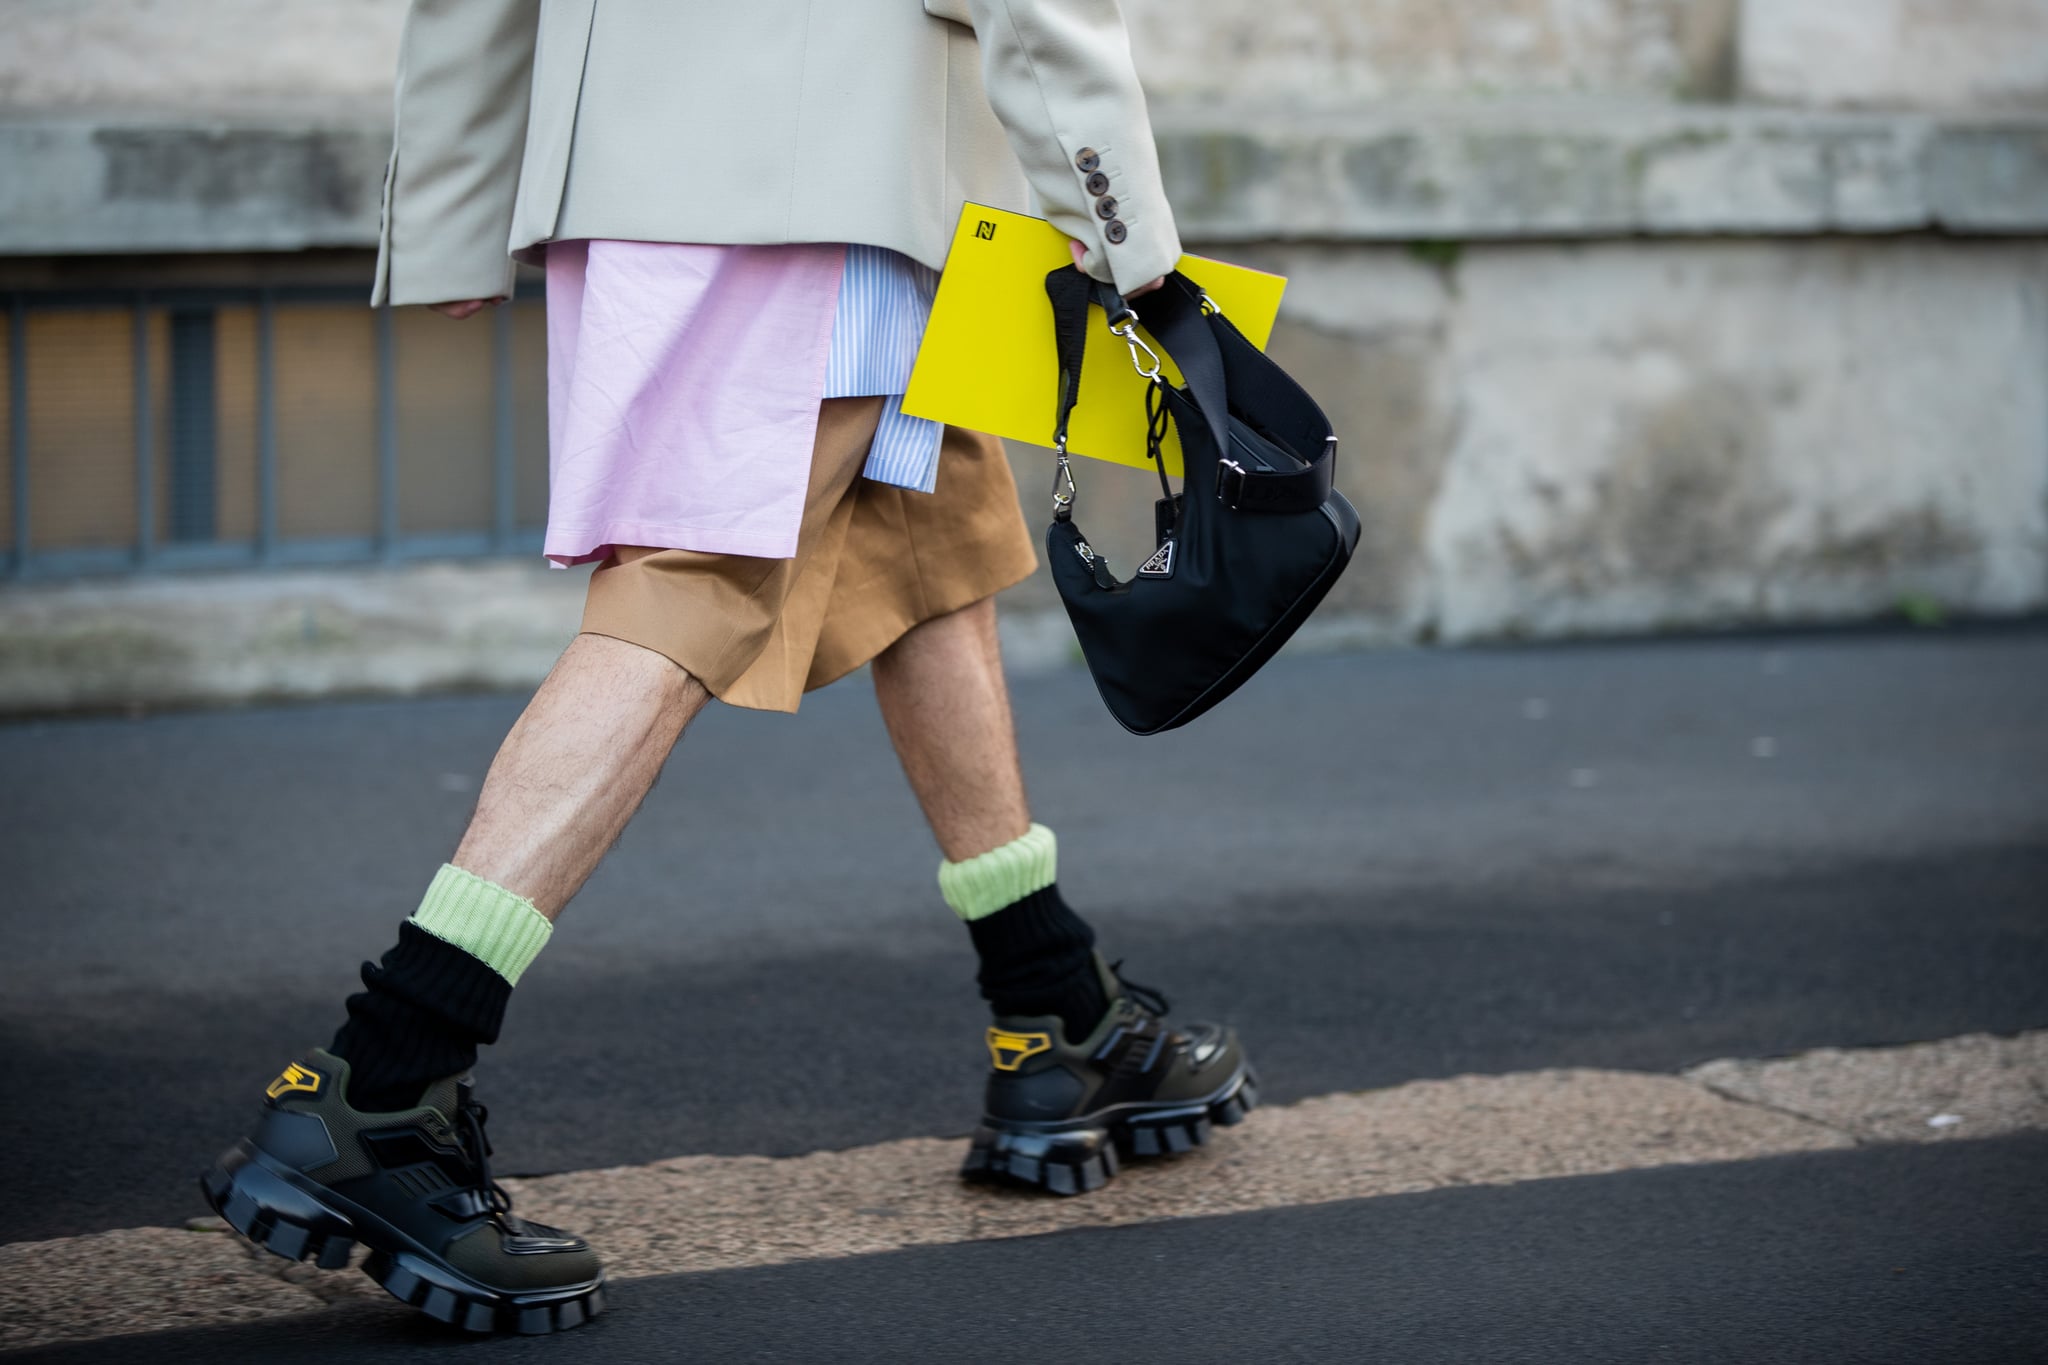 The Next Big '90s Fashion Trend? Prada-Style Nylon Bags - WSJ